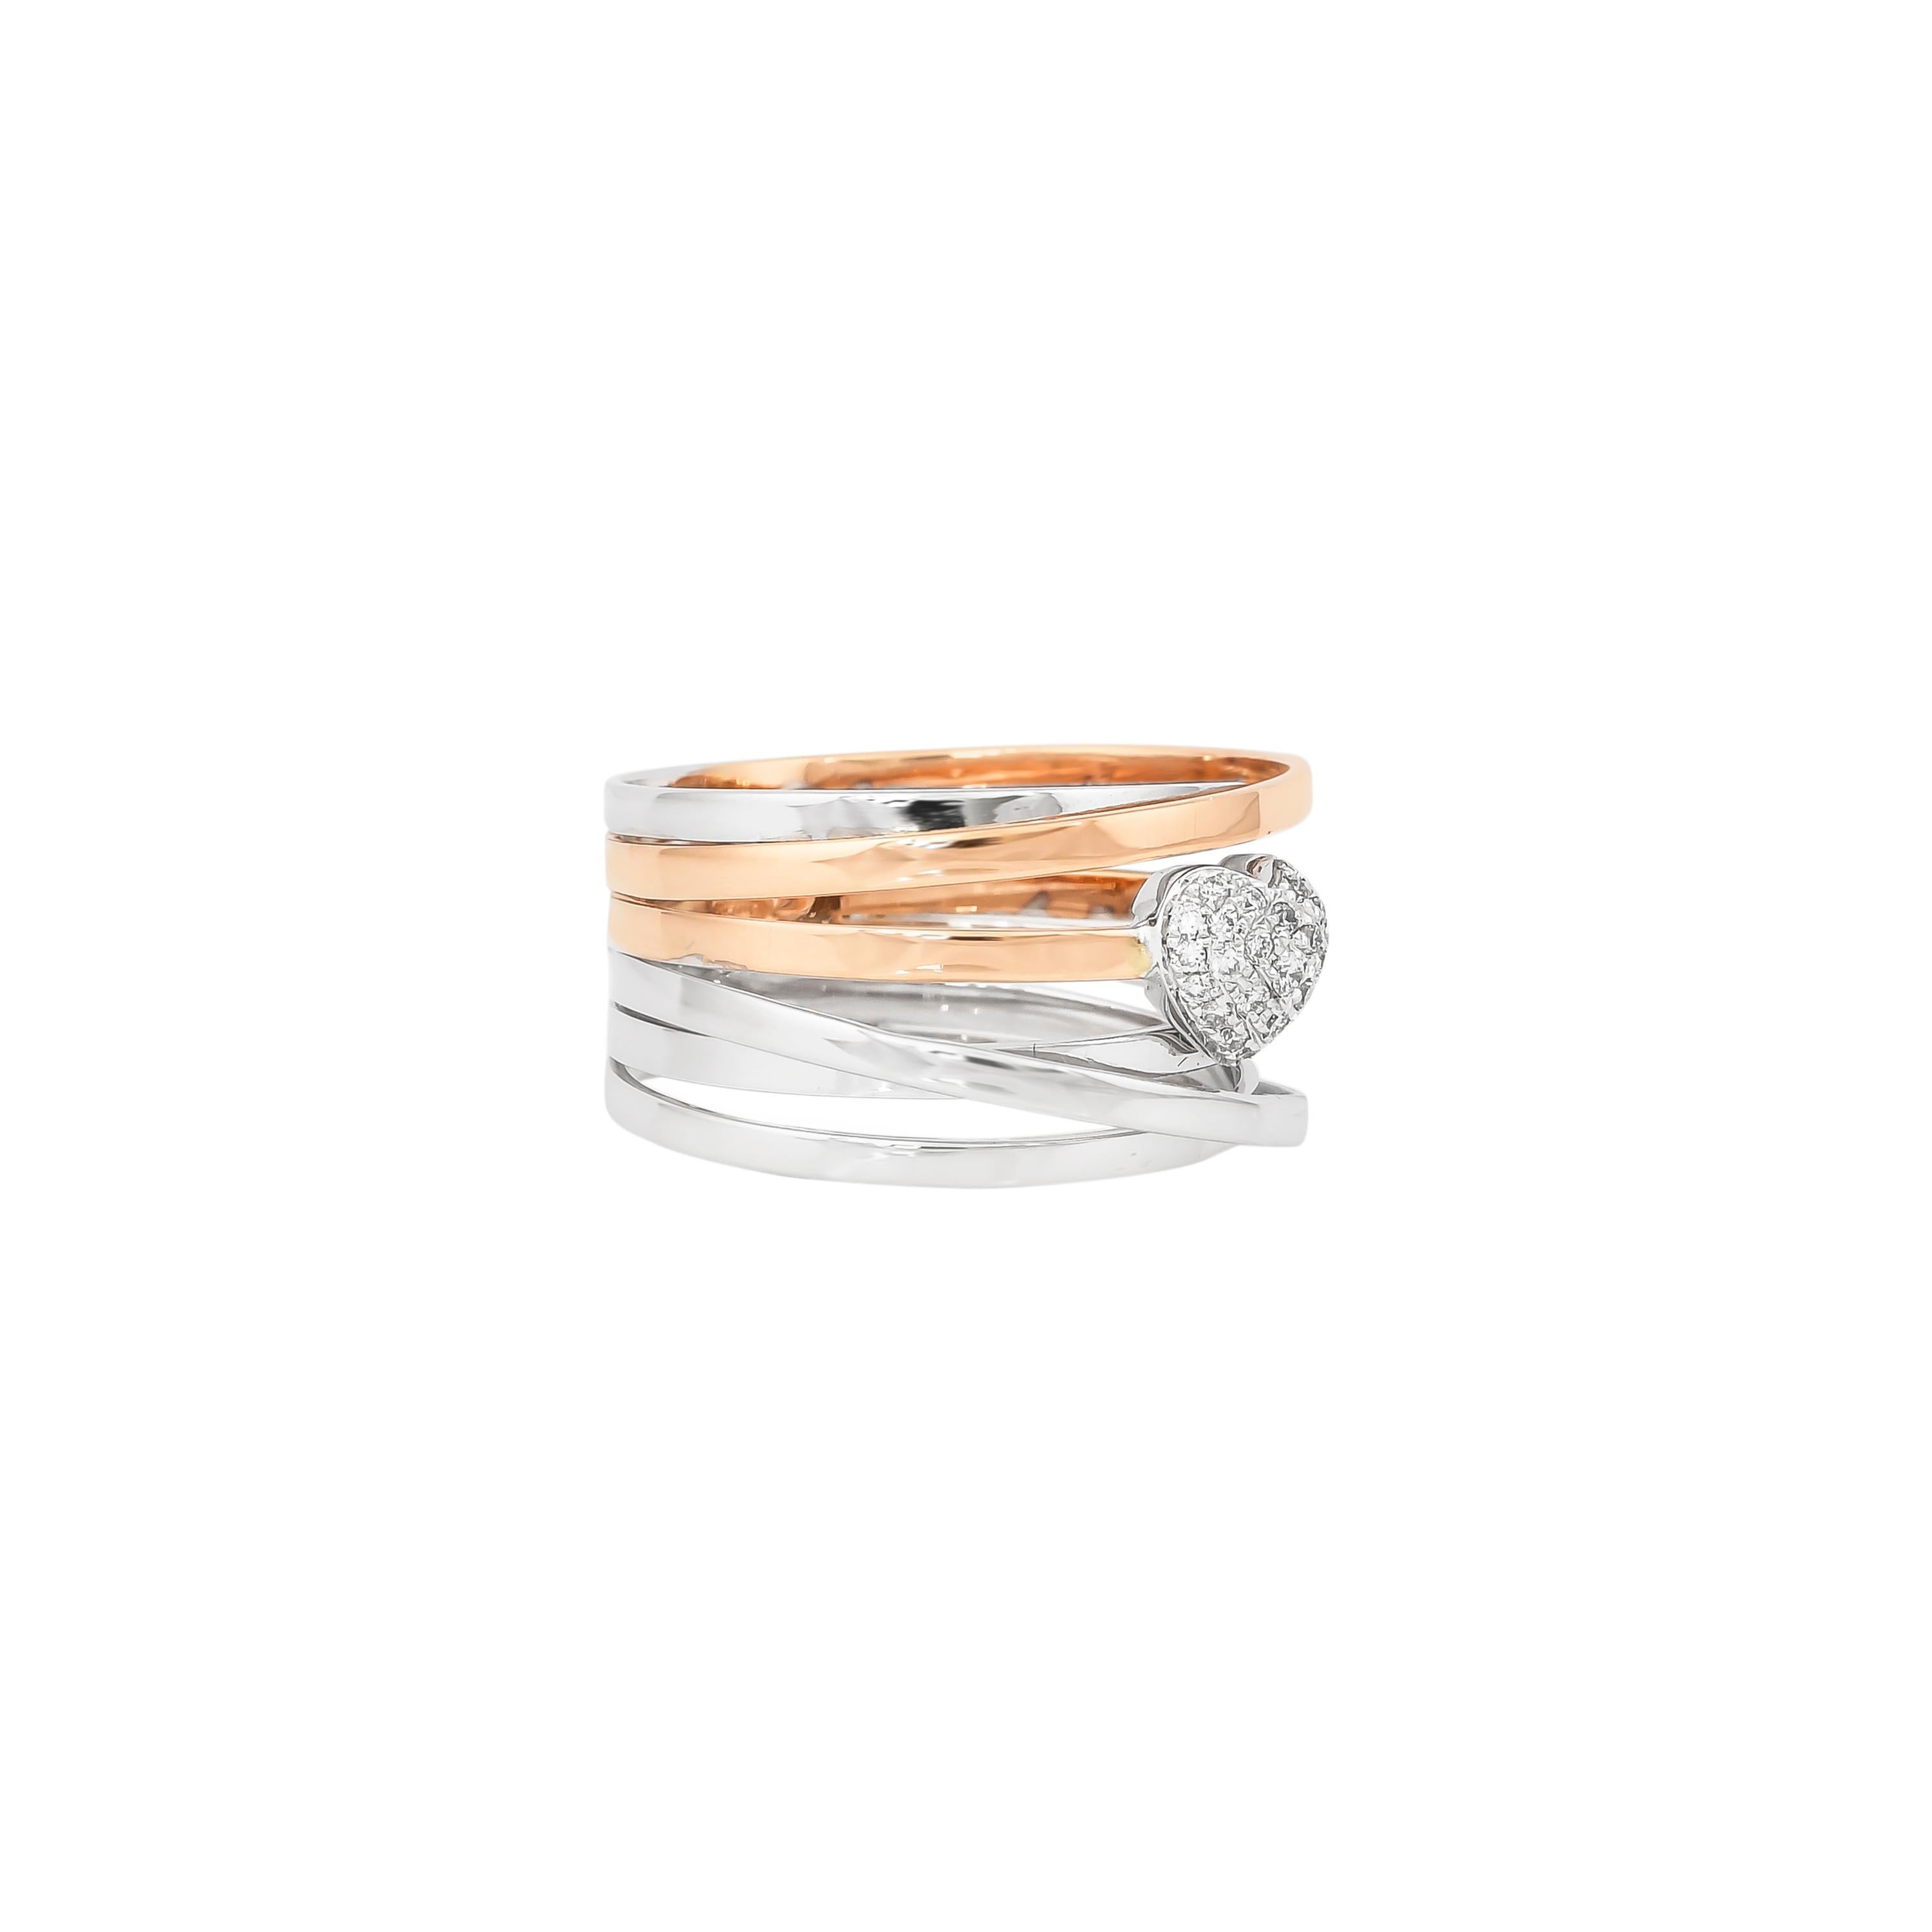 Unique and Designer Cocktail Rings by Sunita Nahata Fine Design.

Classic Diamond ring in 18K White & Rose gold. 

Diamond: 0.01 carat, 1.30mm size, round shape, G colour, VS clarity.
Diamond: 0.031 carat, 1.10mm size, round shape, G colour, VS